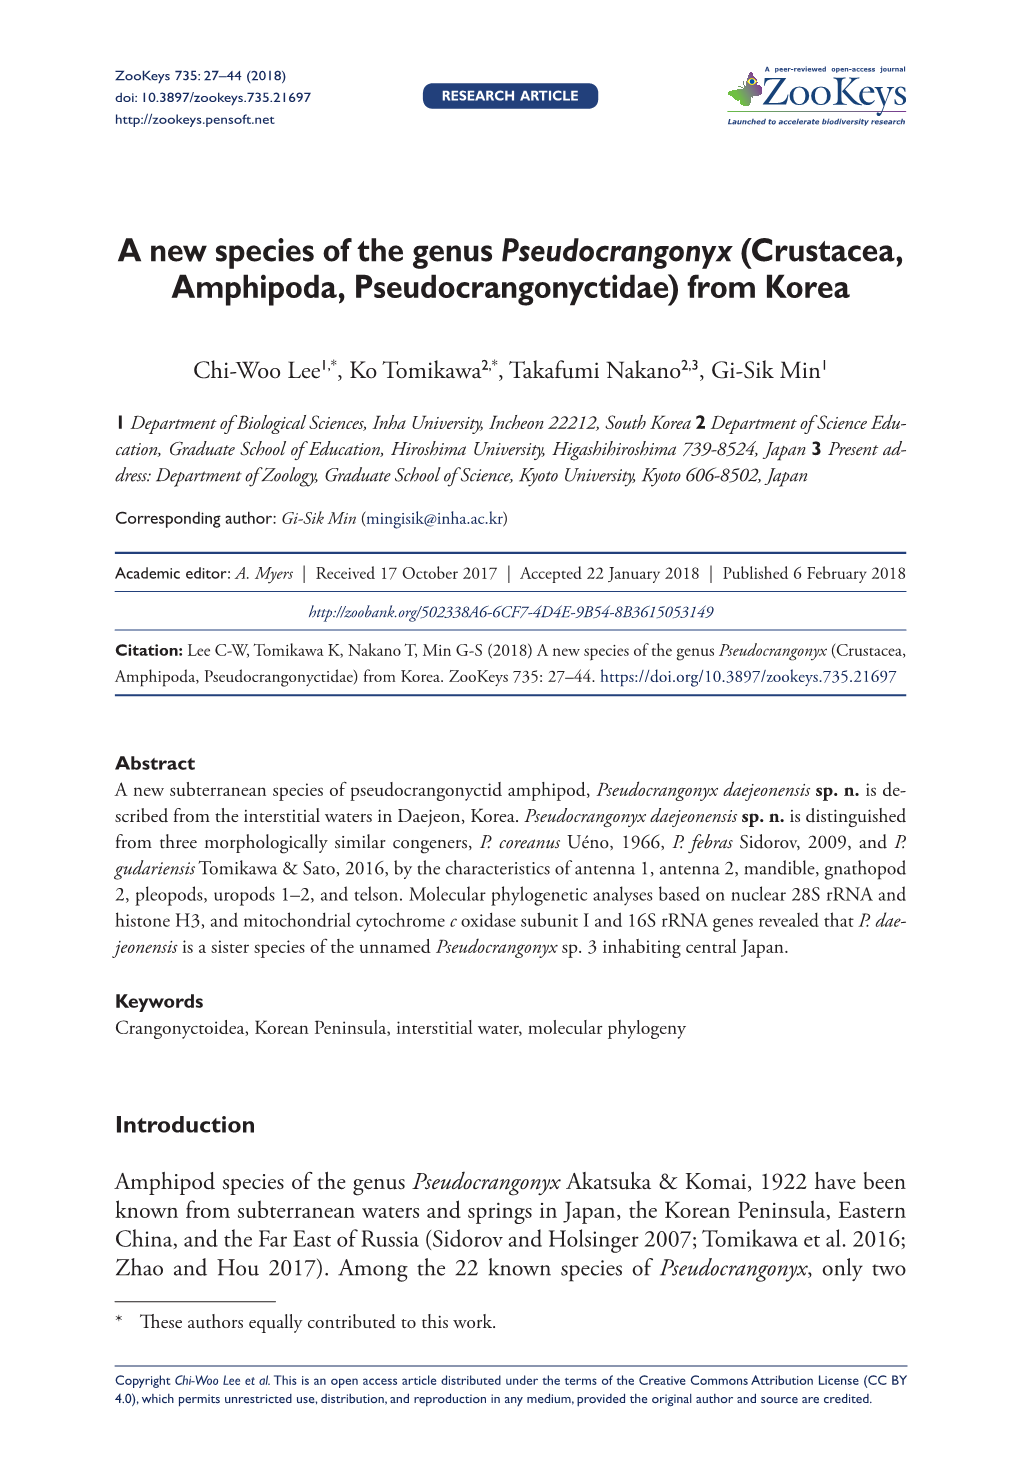 A New Species of the Genus Pseudocrangonyx (Crustacea, Amphipoda, Pseudocrangonyctidae) from Korea